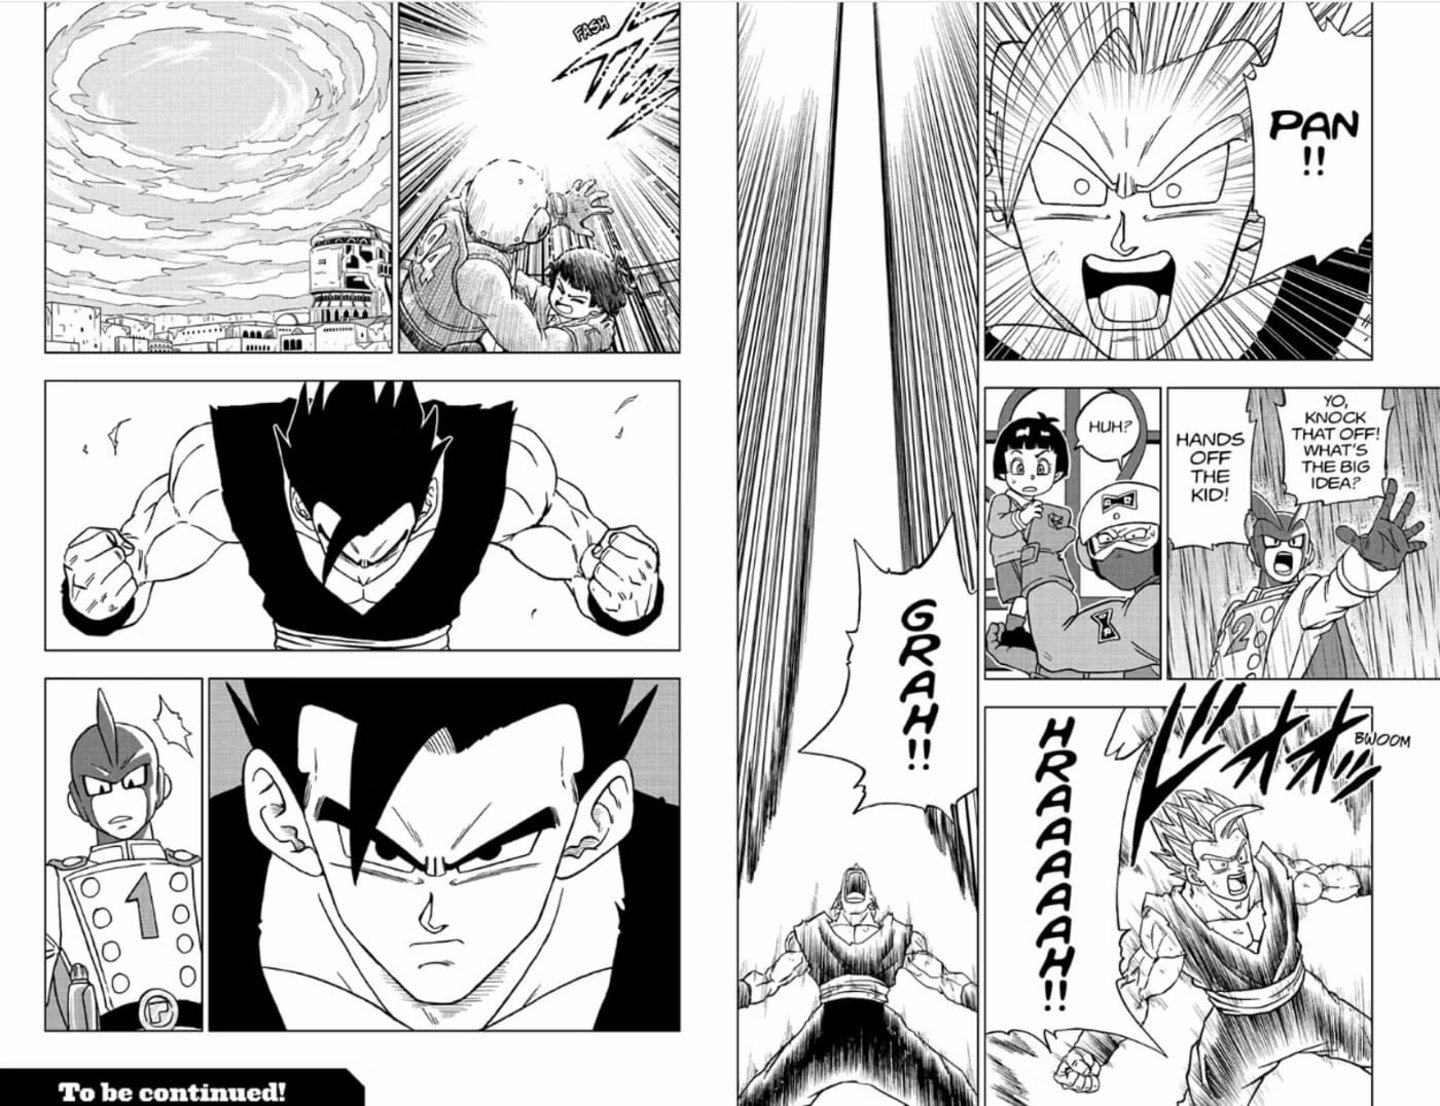 Este es tu Gohan? Dragon Ball Super Manga Capitulo 94